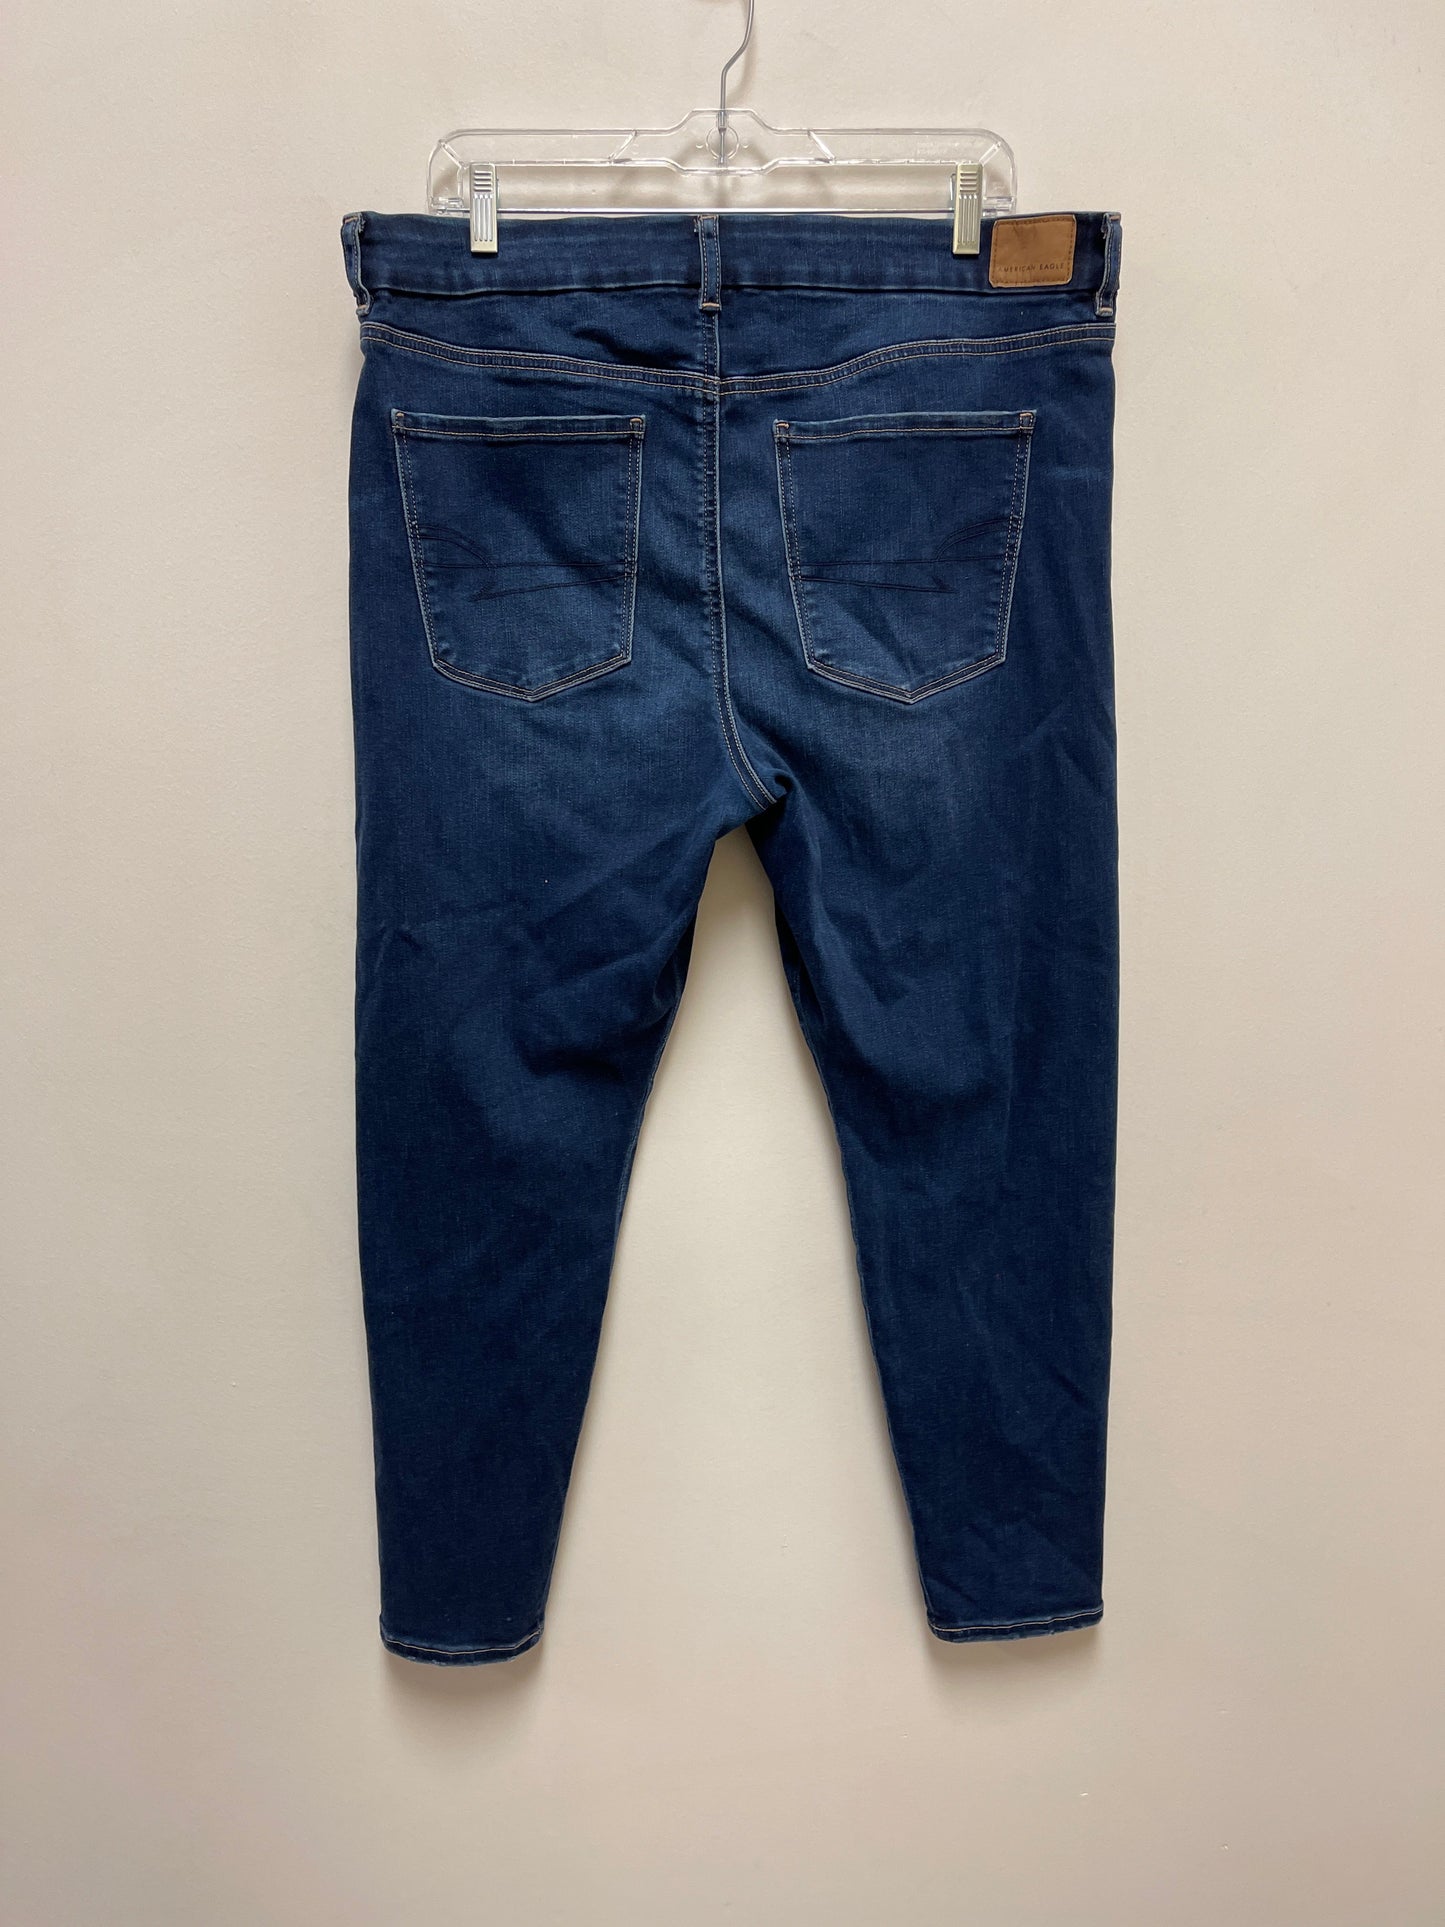 Blue Denim Jeans Skinny American Eagle, Size 18